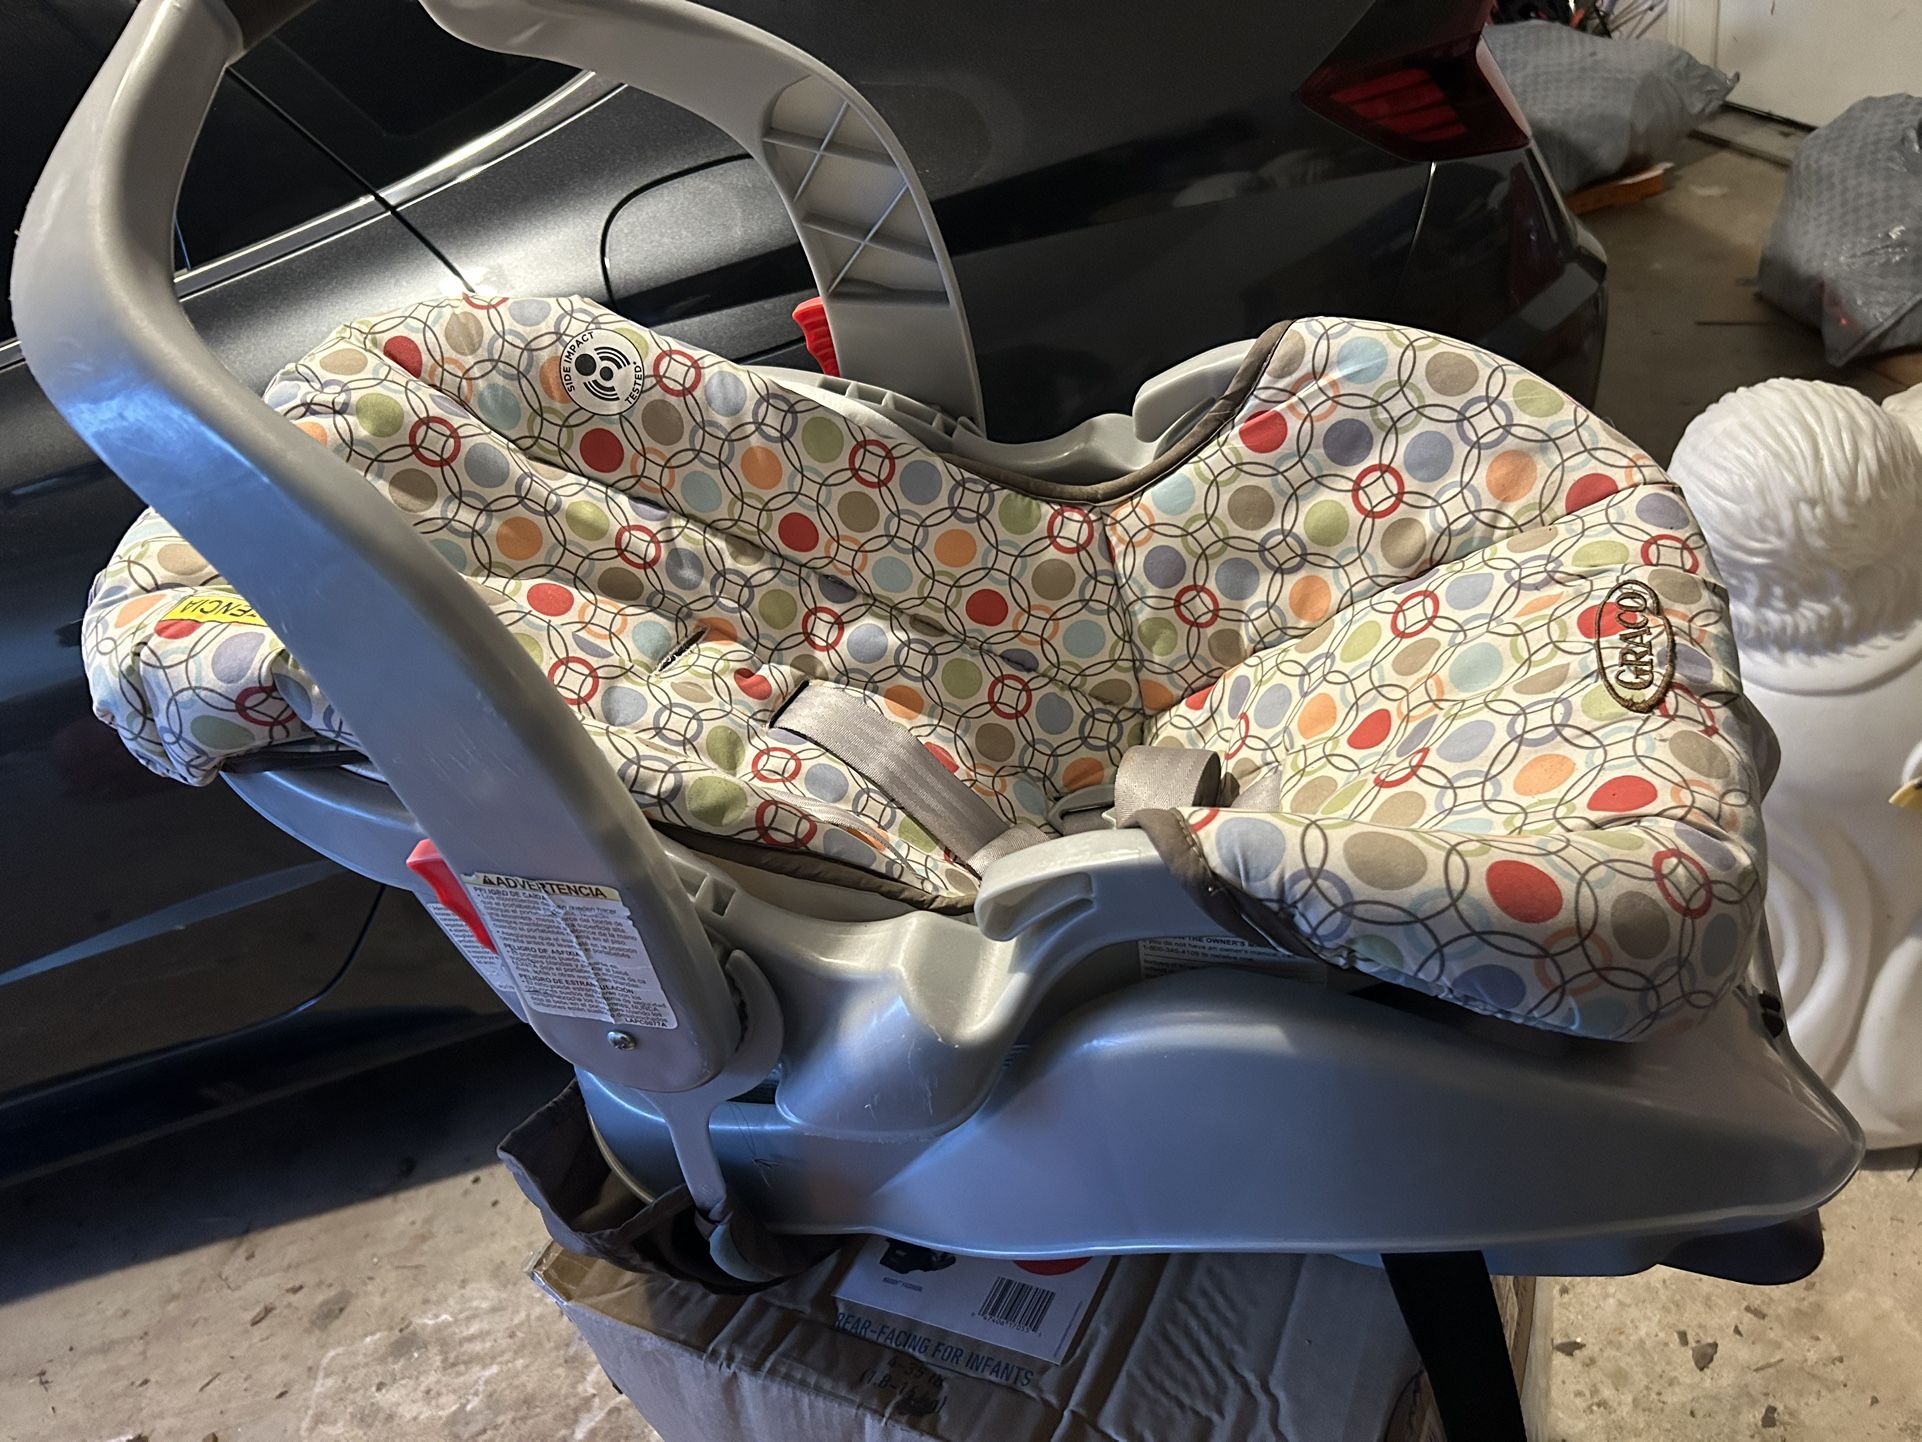 Graco baby car seat